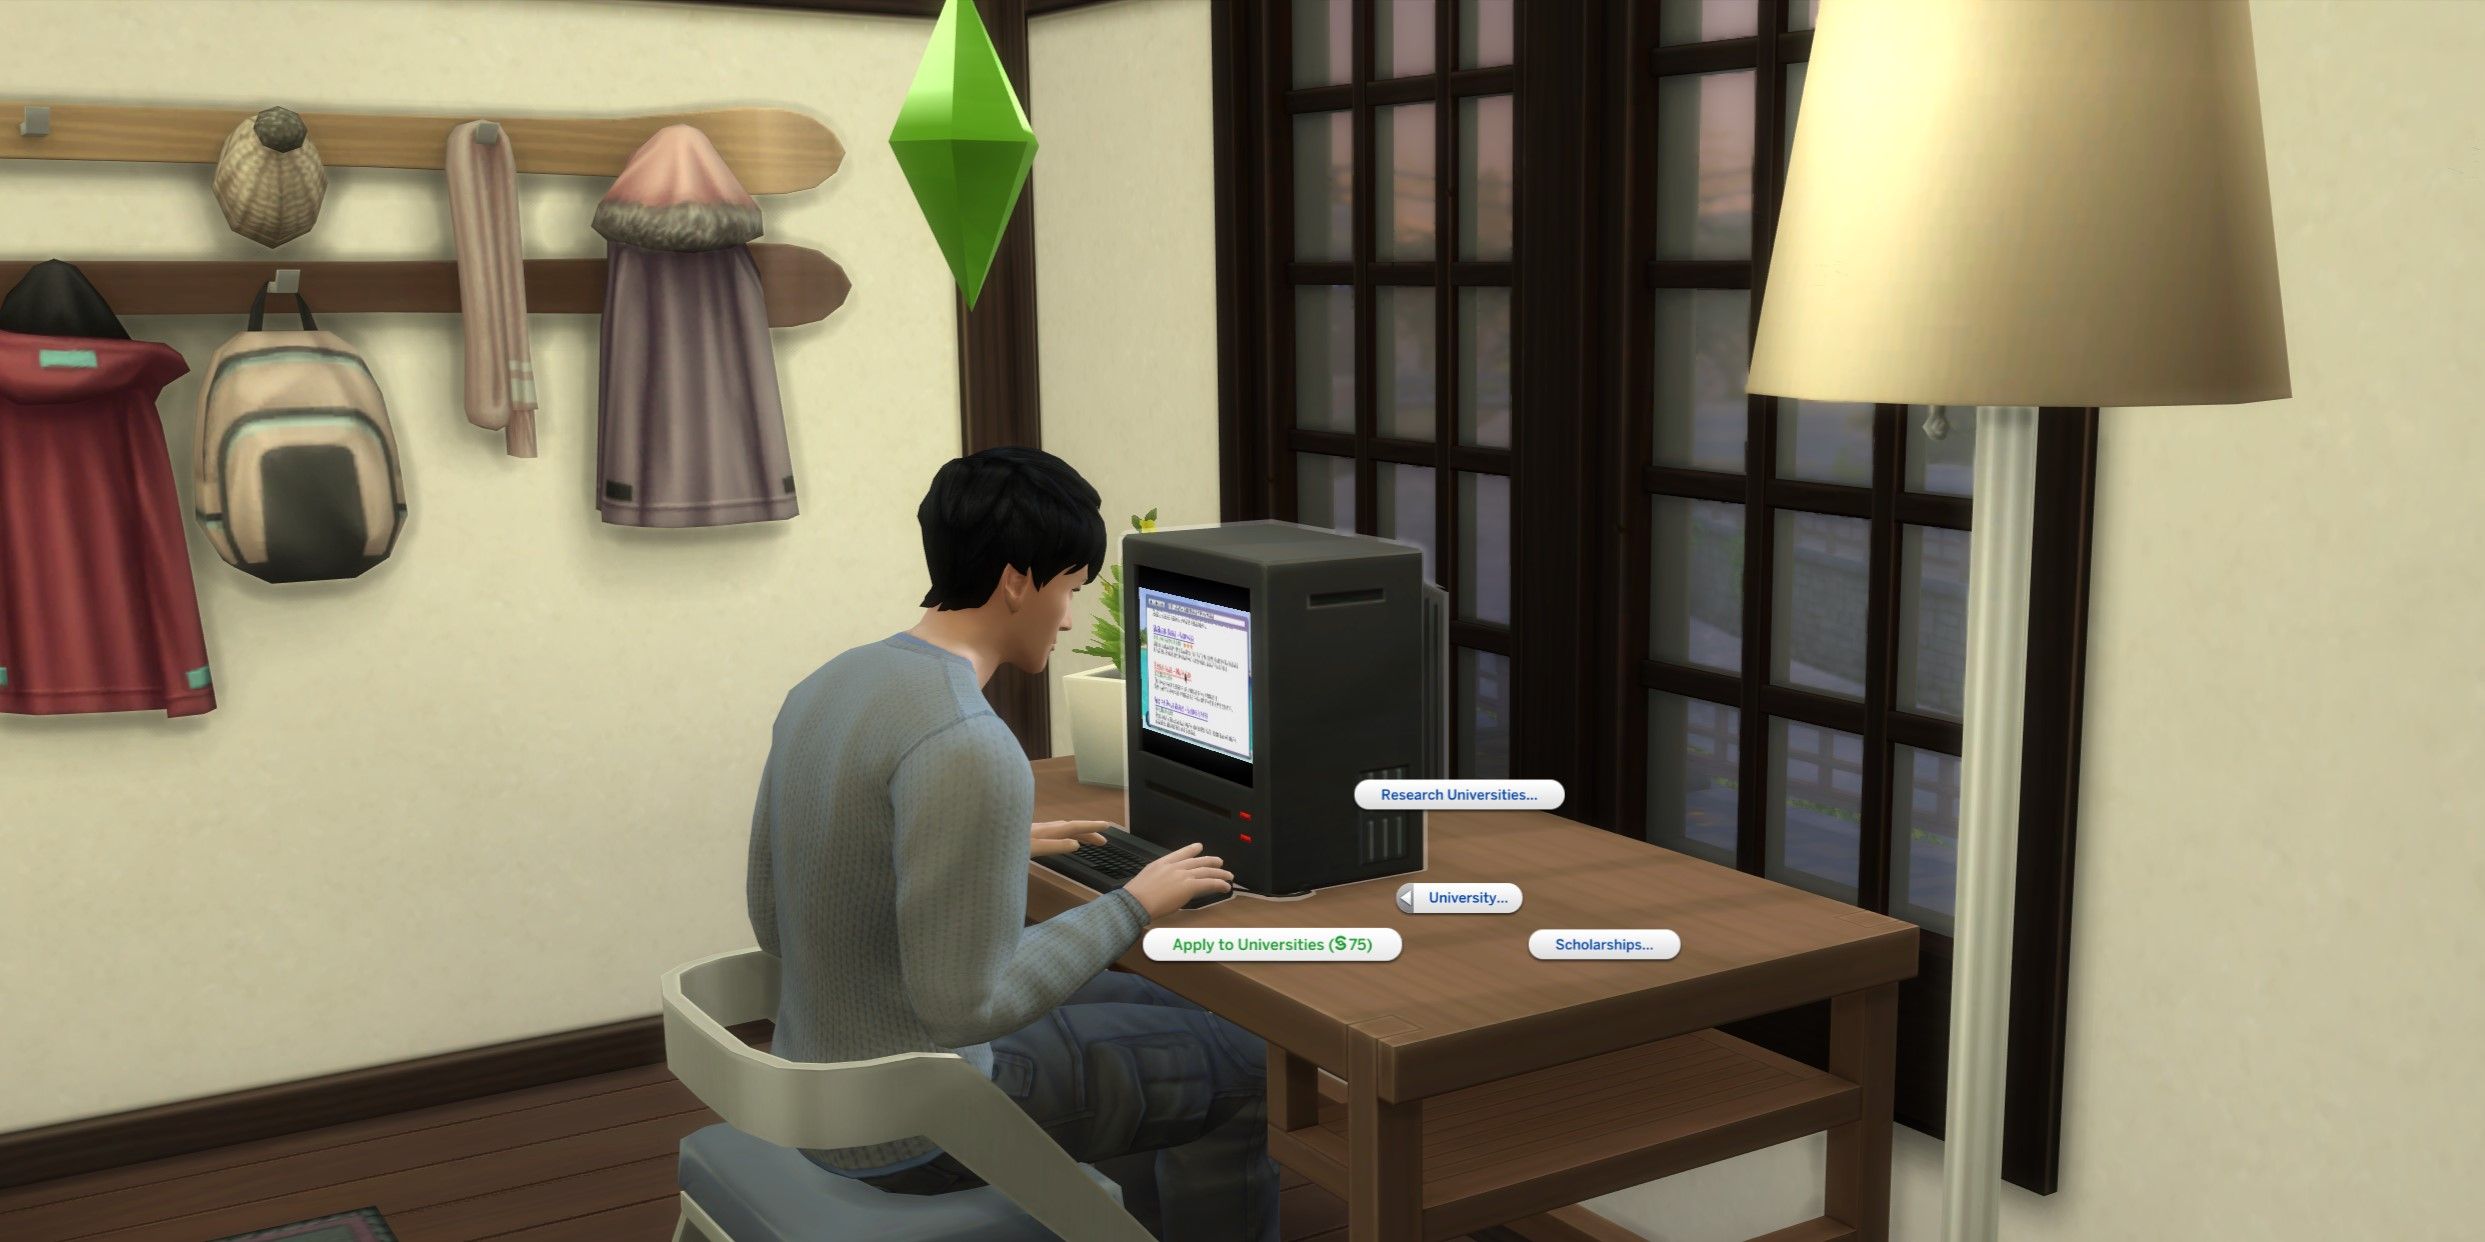 The Sims 4: A Sim Applying To University